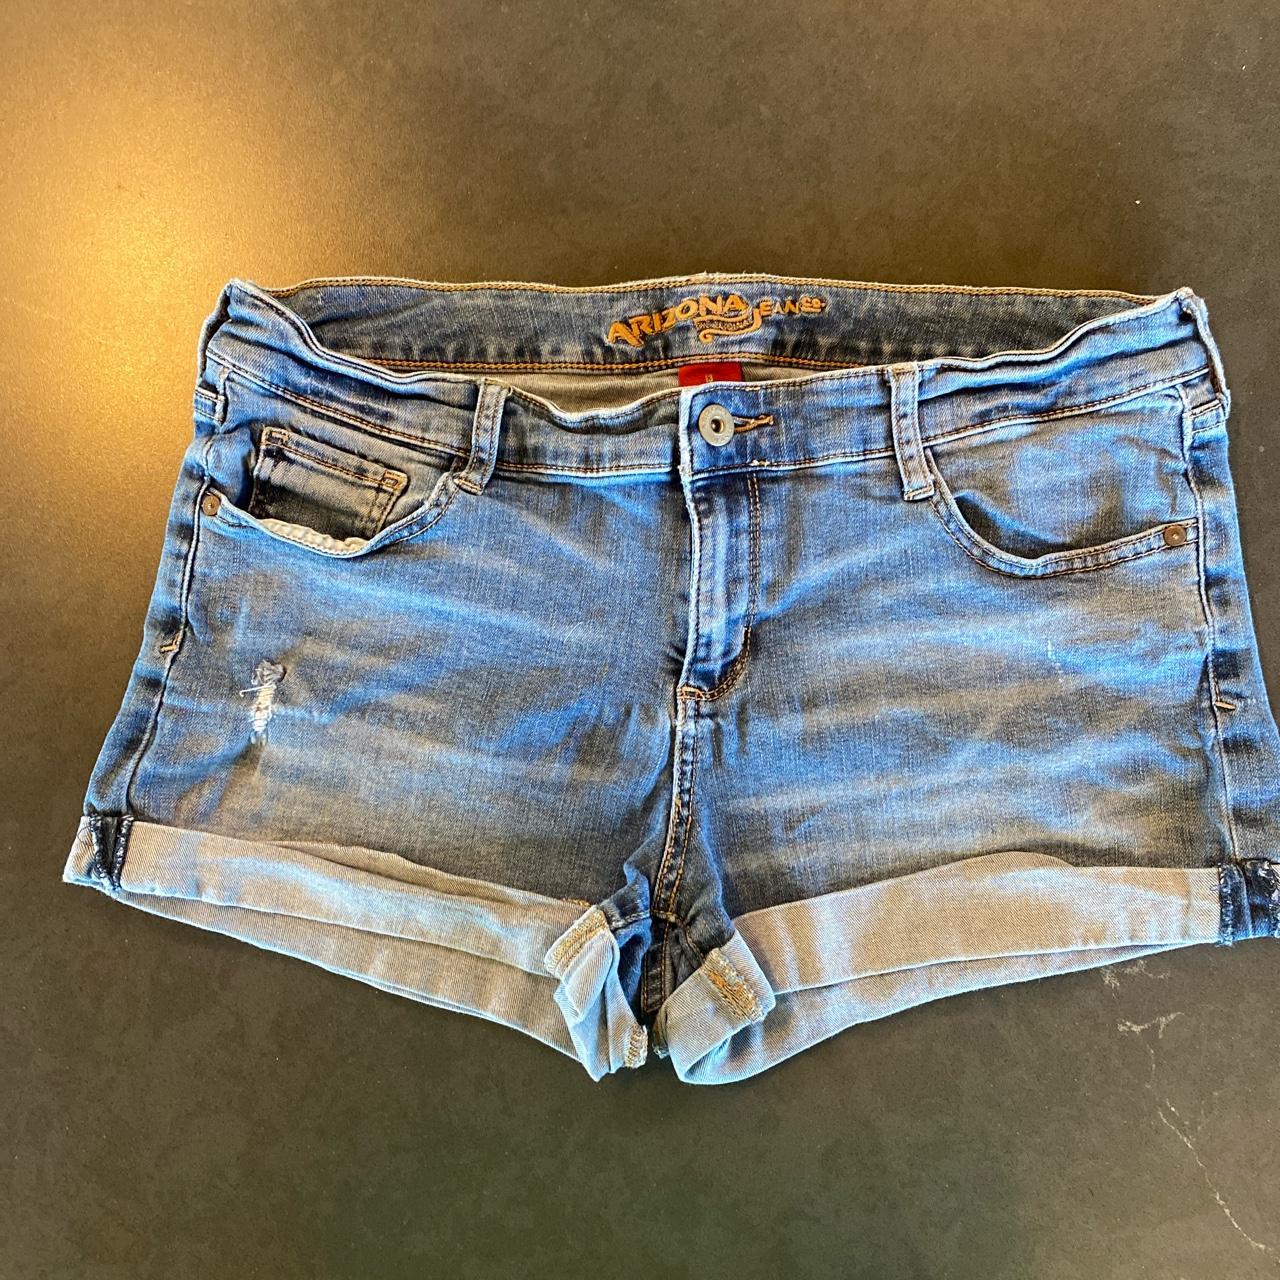 Product Image 1 - Cute Arizona Jeans light washed